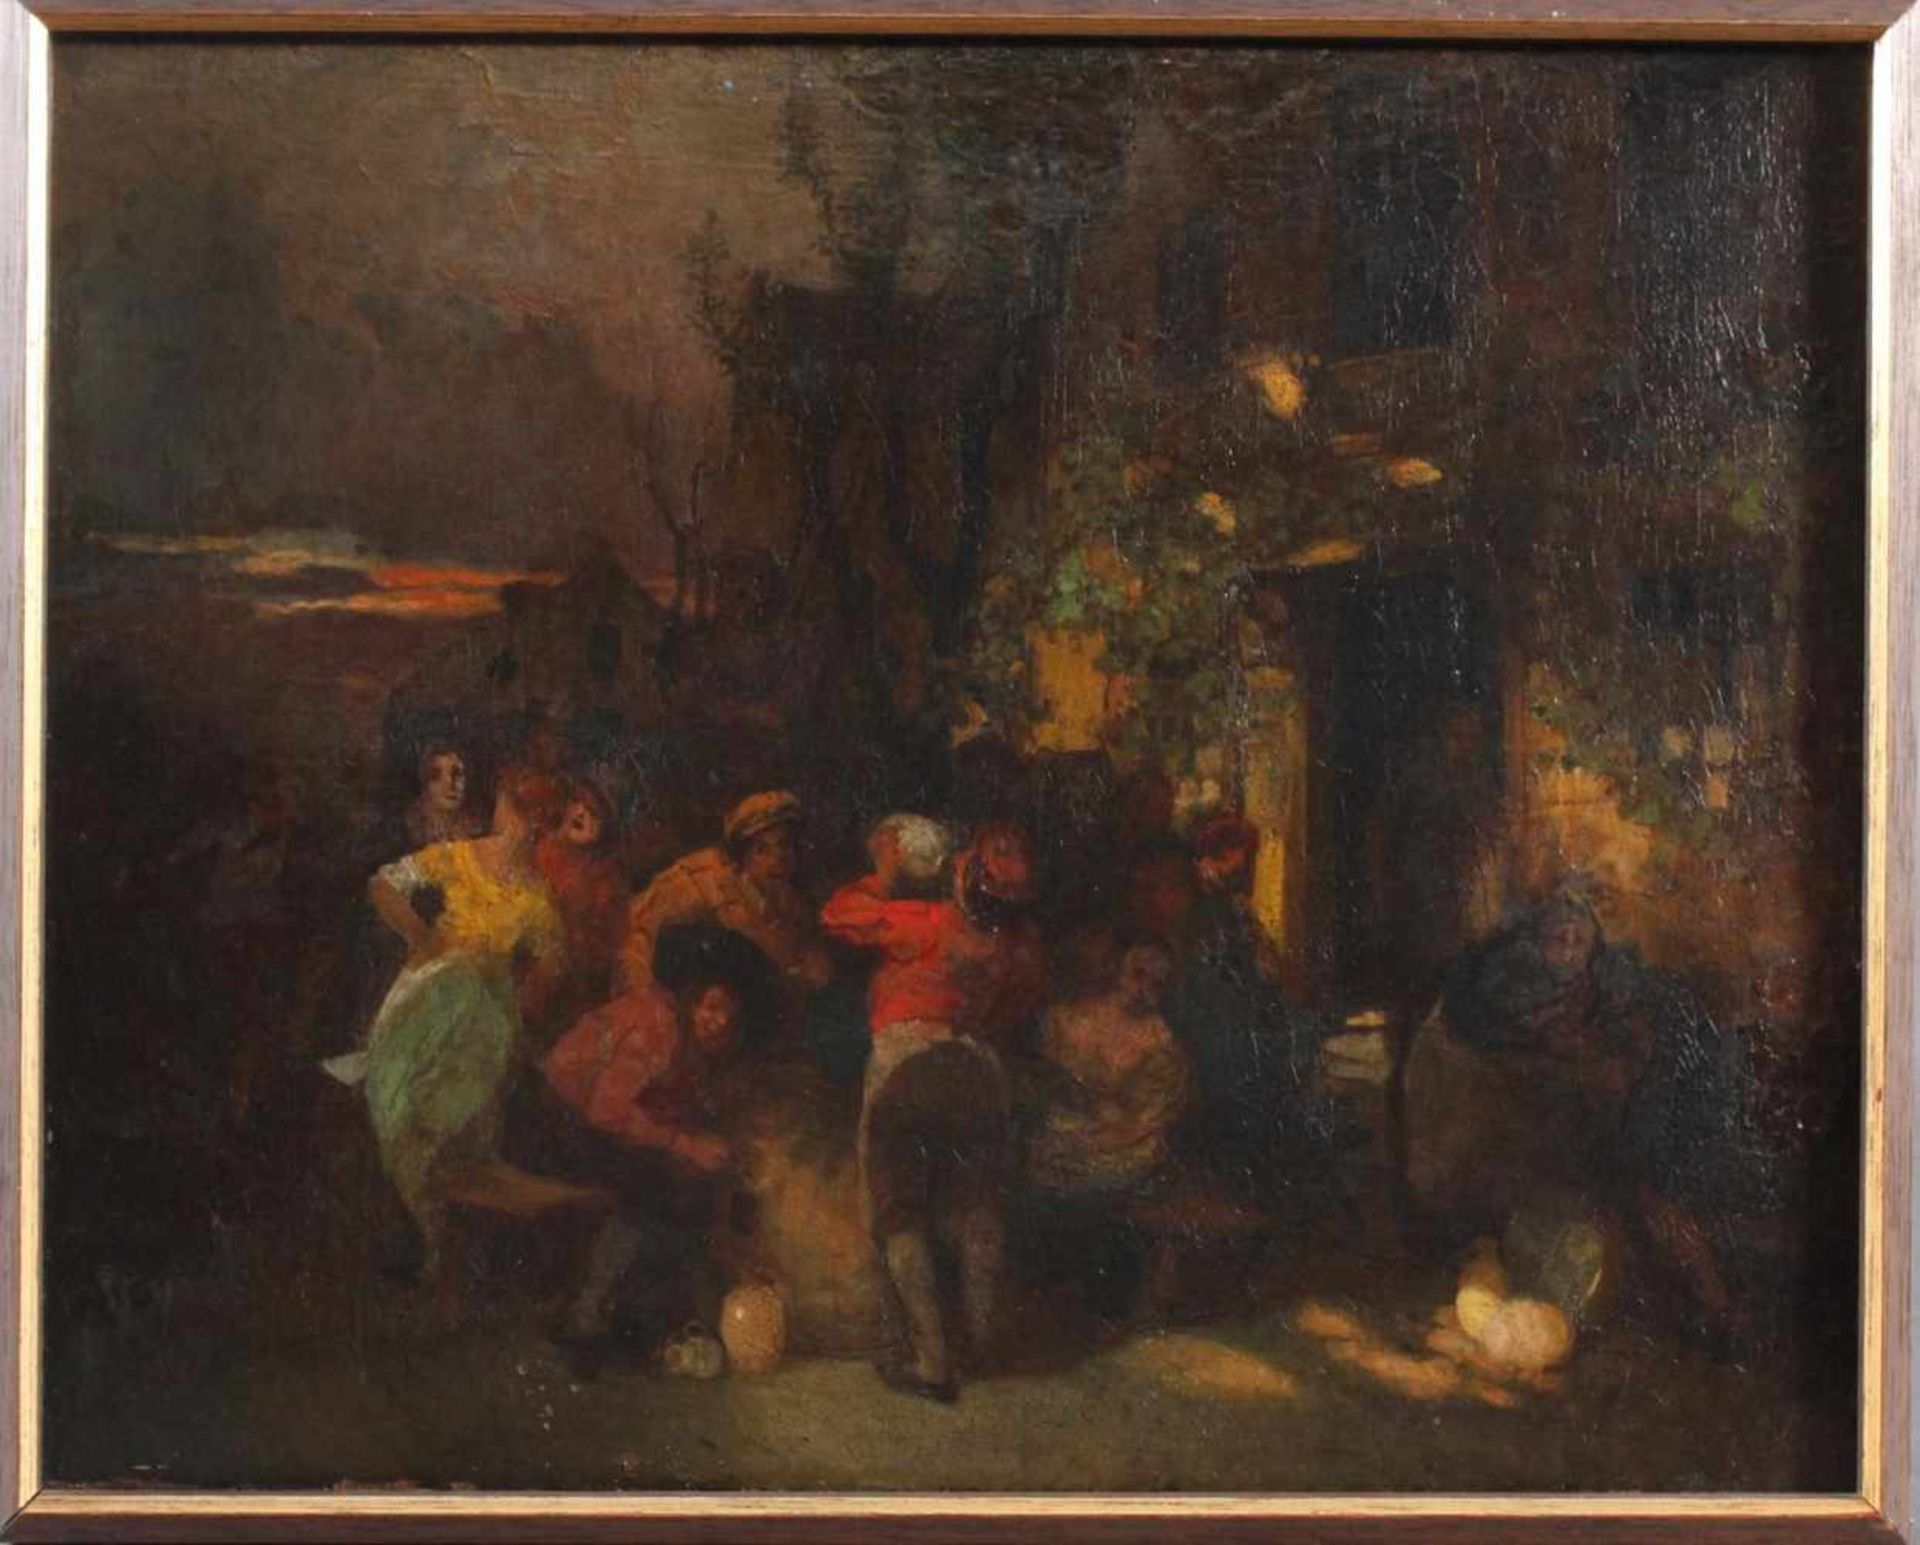 Unbekannter Künstler aus dem 18. Jh., TrinkgelageÖl auf Leinwand, dubliert, gerahmt, ca. 43 x 55